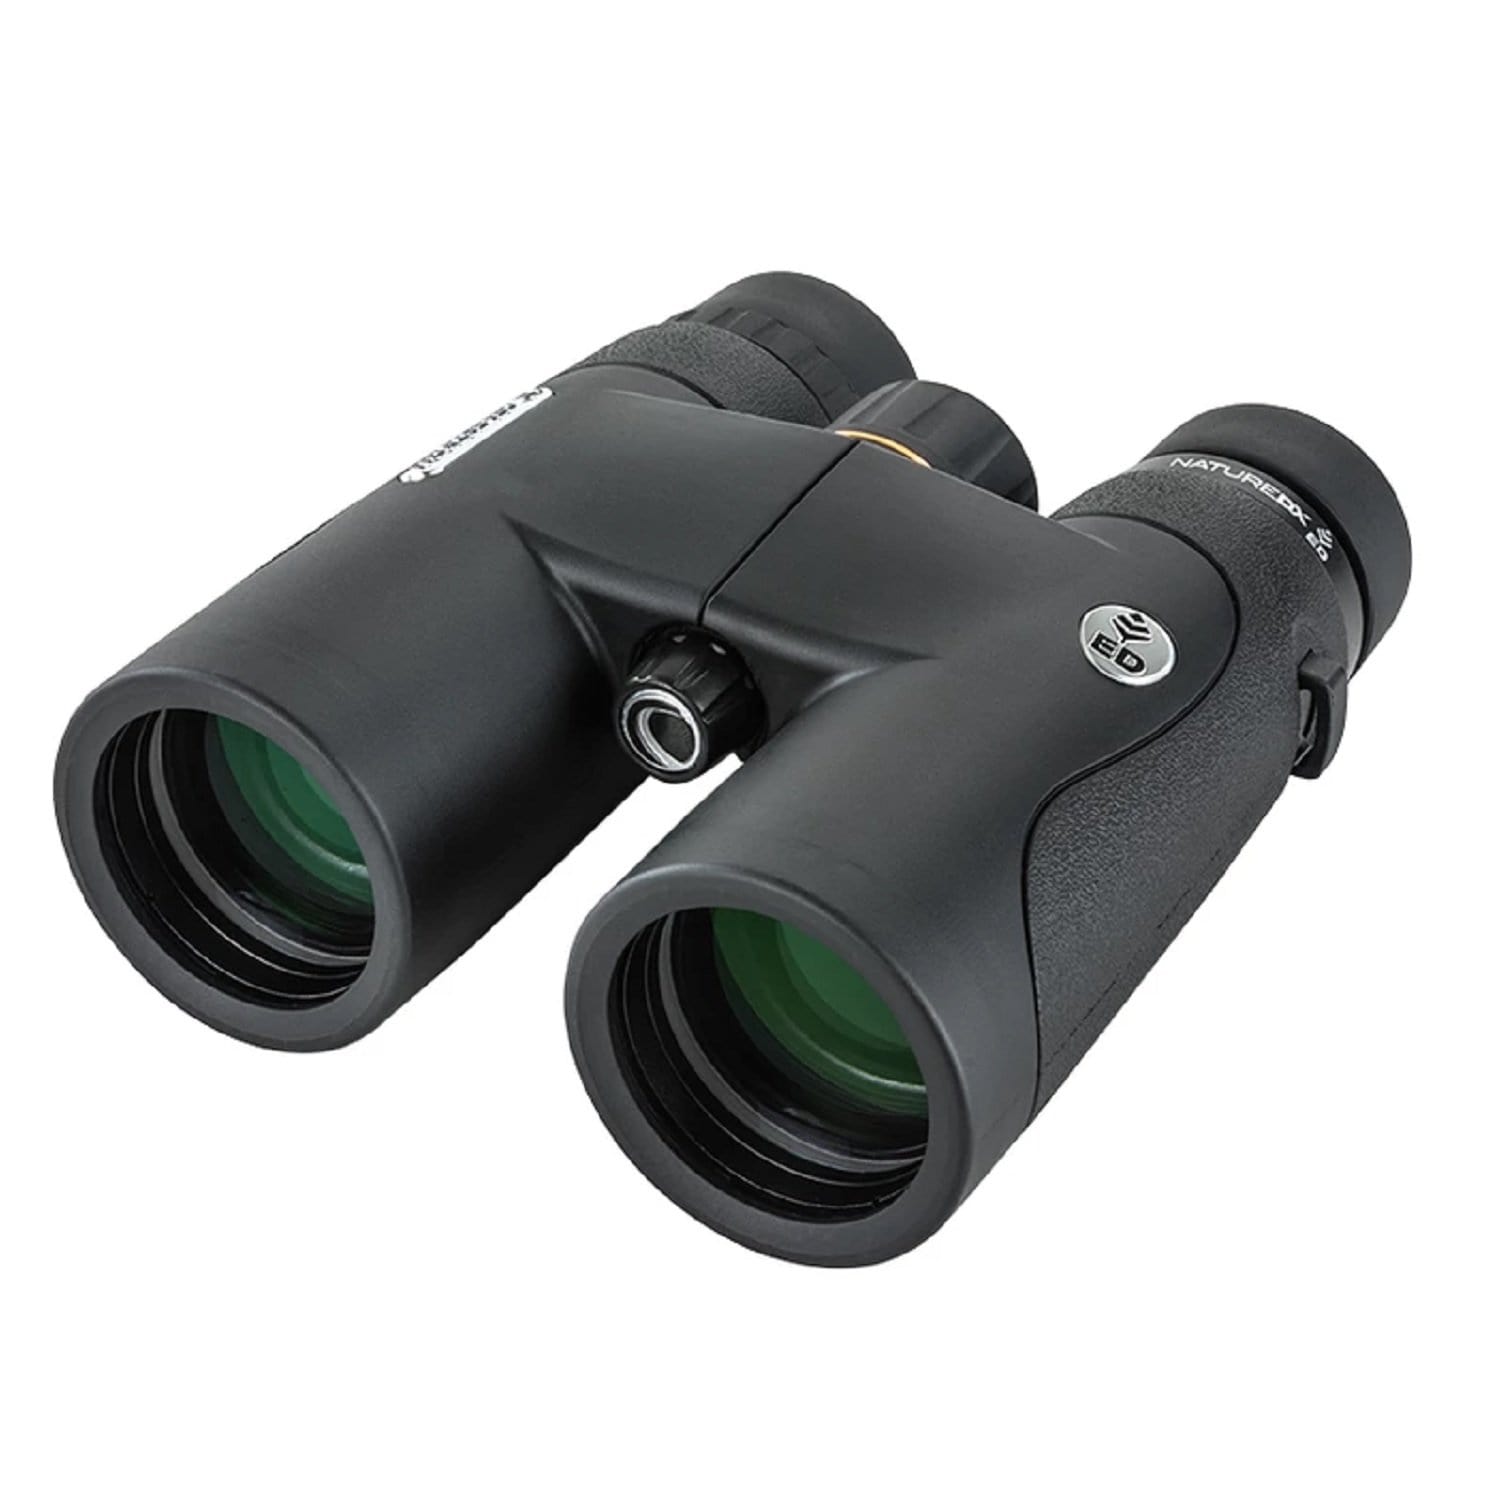 Celestron Optics : Binoculars/Monoculars Celestron Nature DX 10X42 ED Binoculars